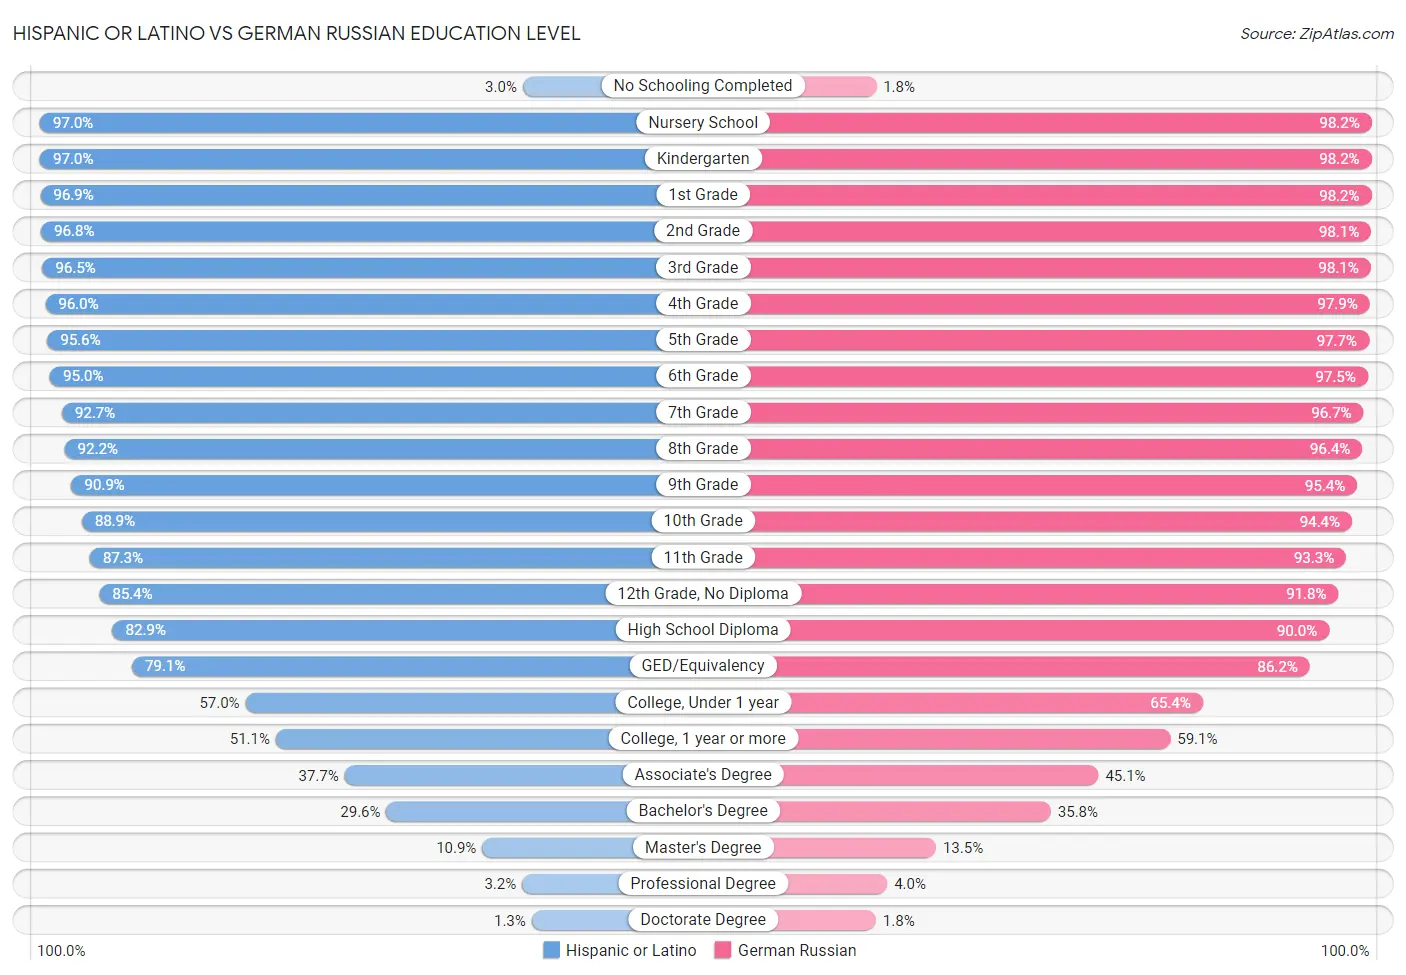 Hispanic or Latino vs German Russian Education Level